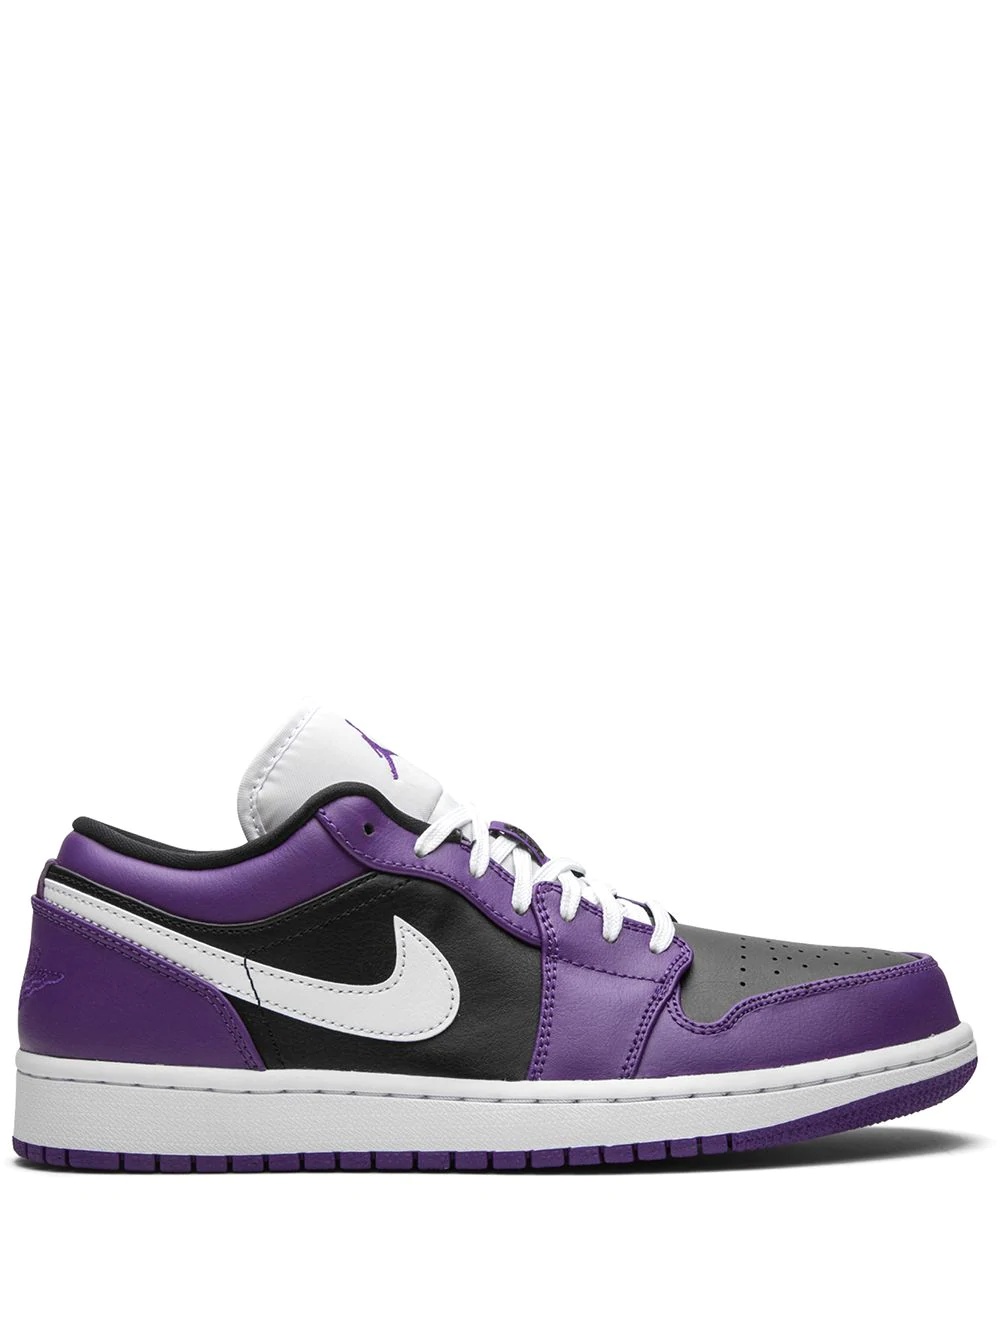 Air Jordan 1 Low "Court Purple" sneakers - 1